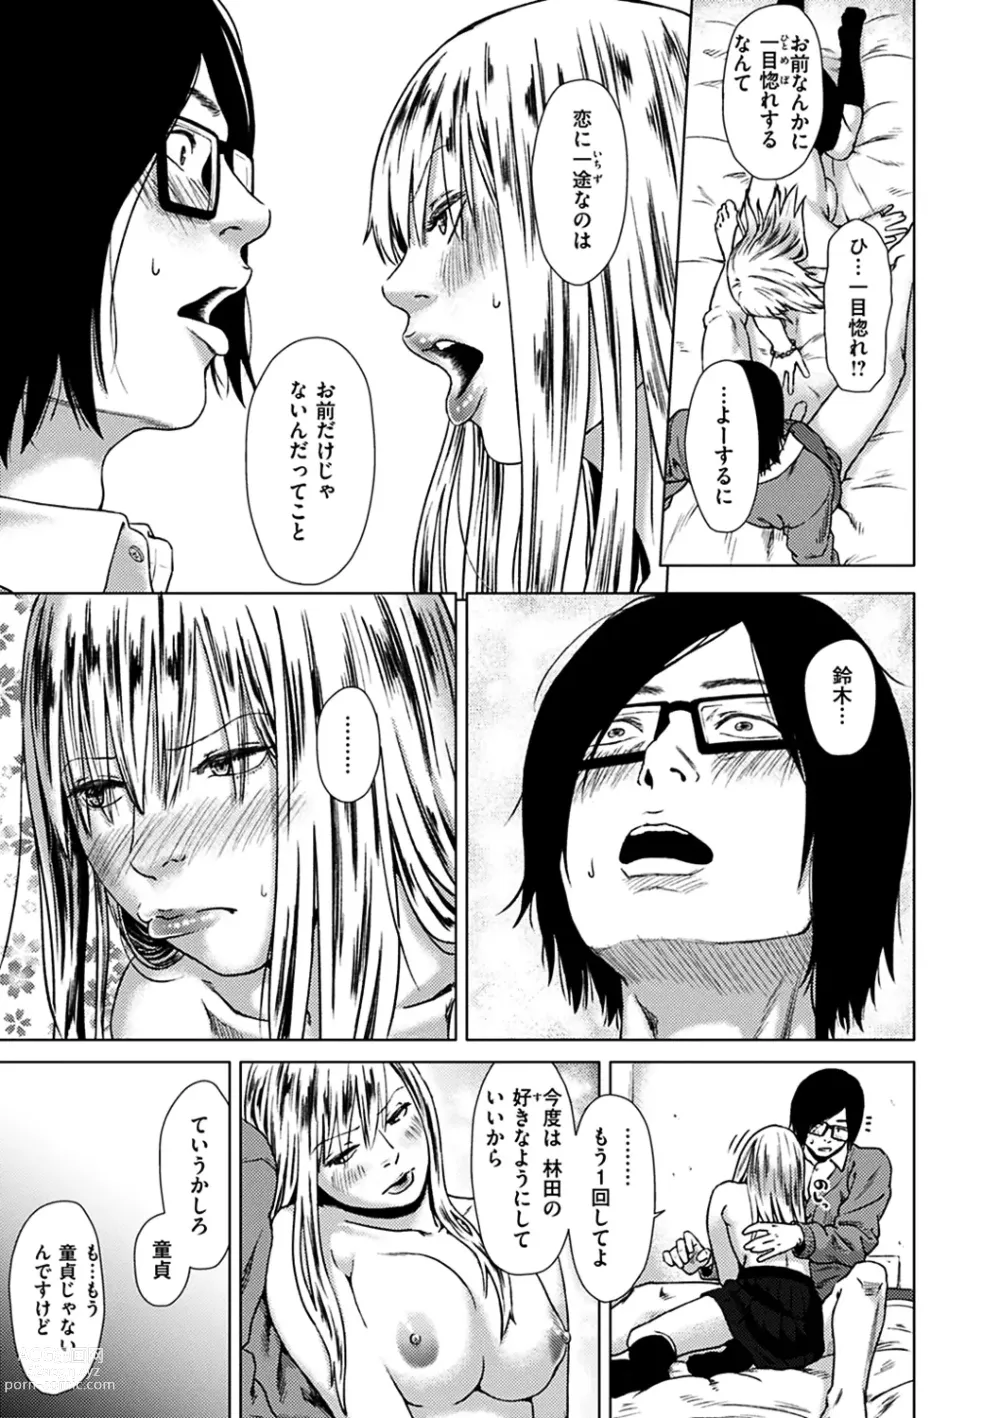 Page 151 of manga Kimi dake ni - I Only Love You...